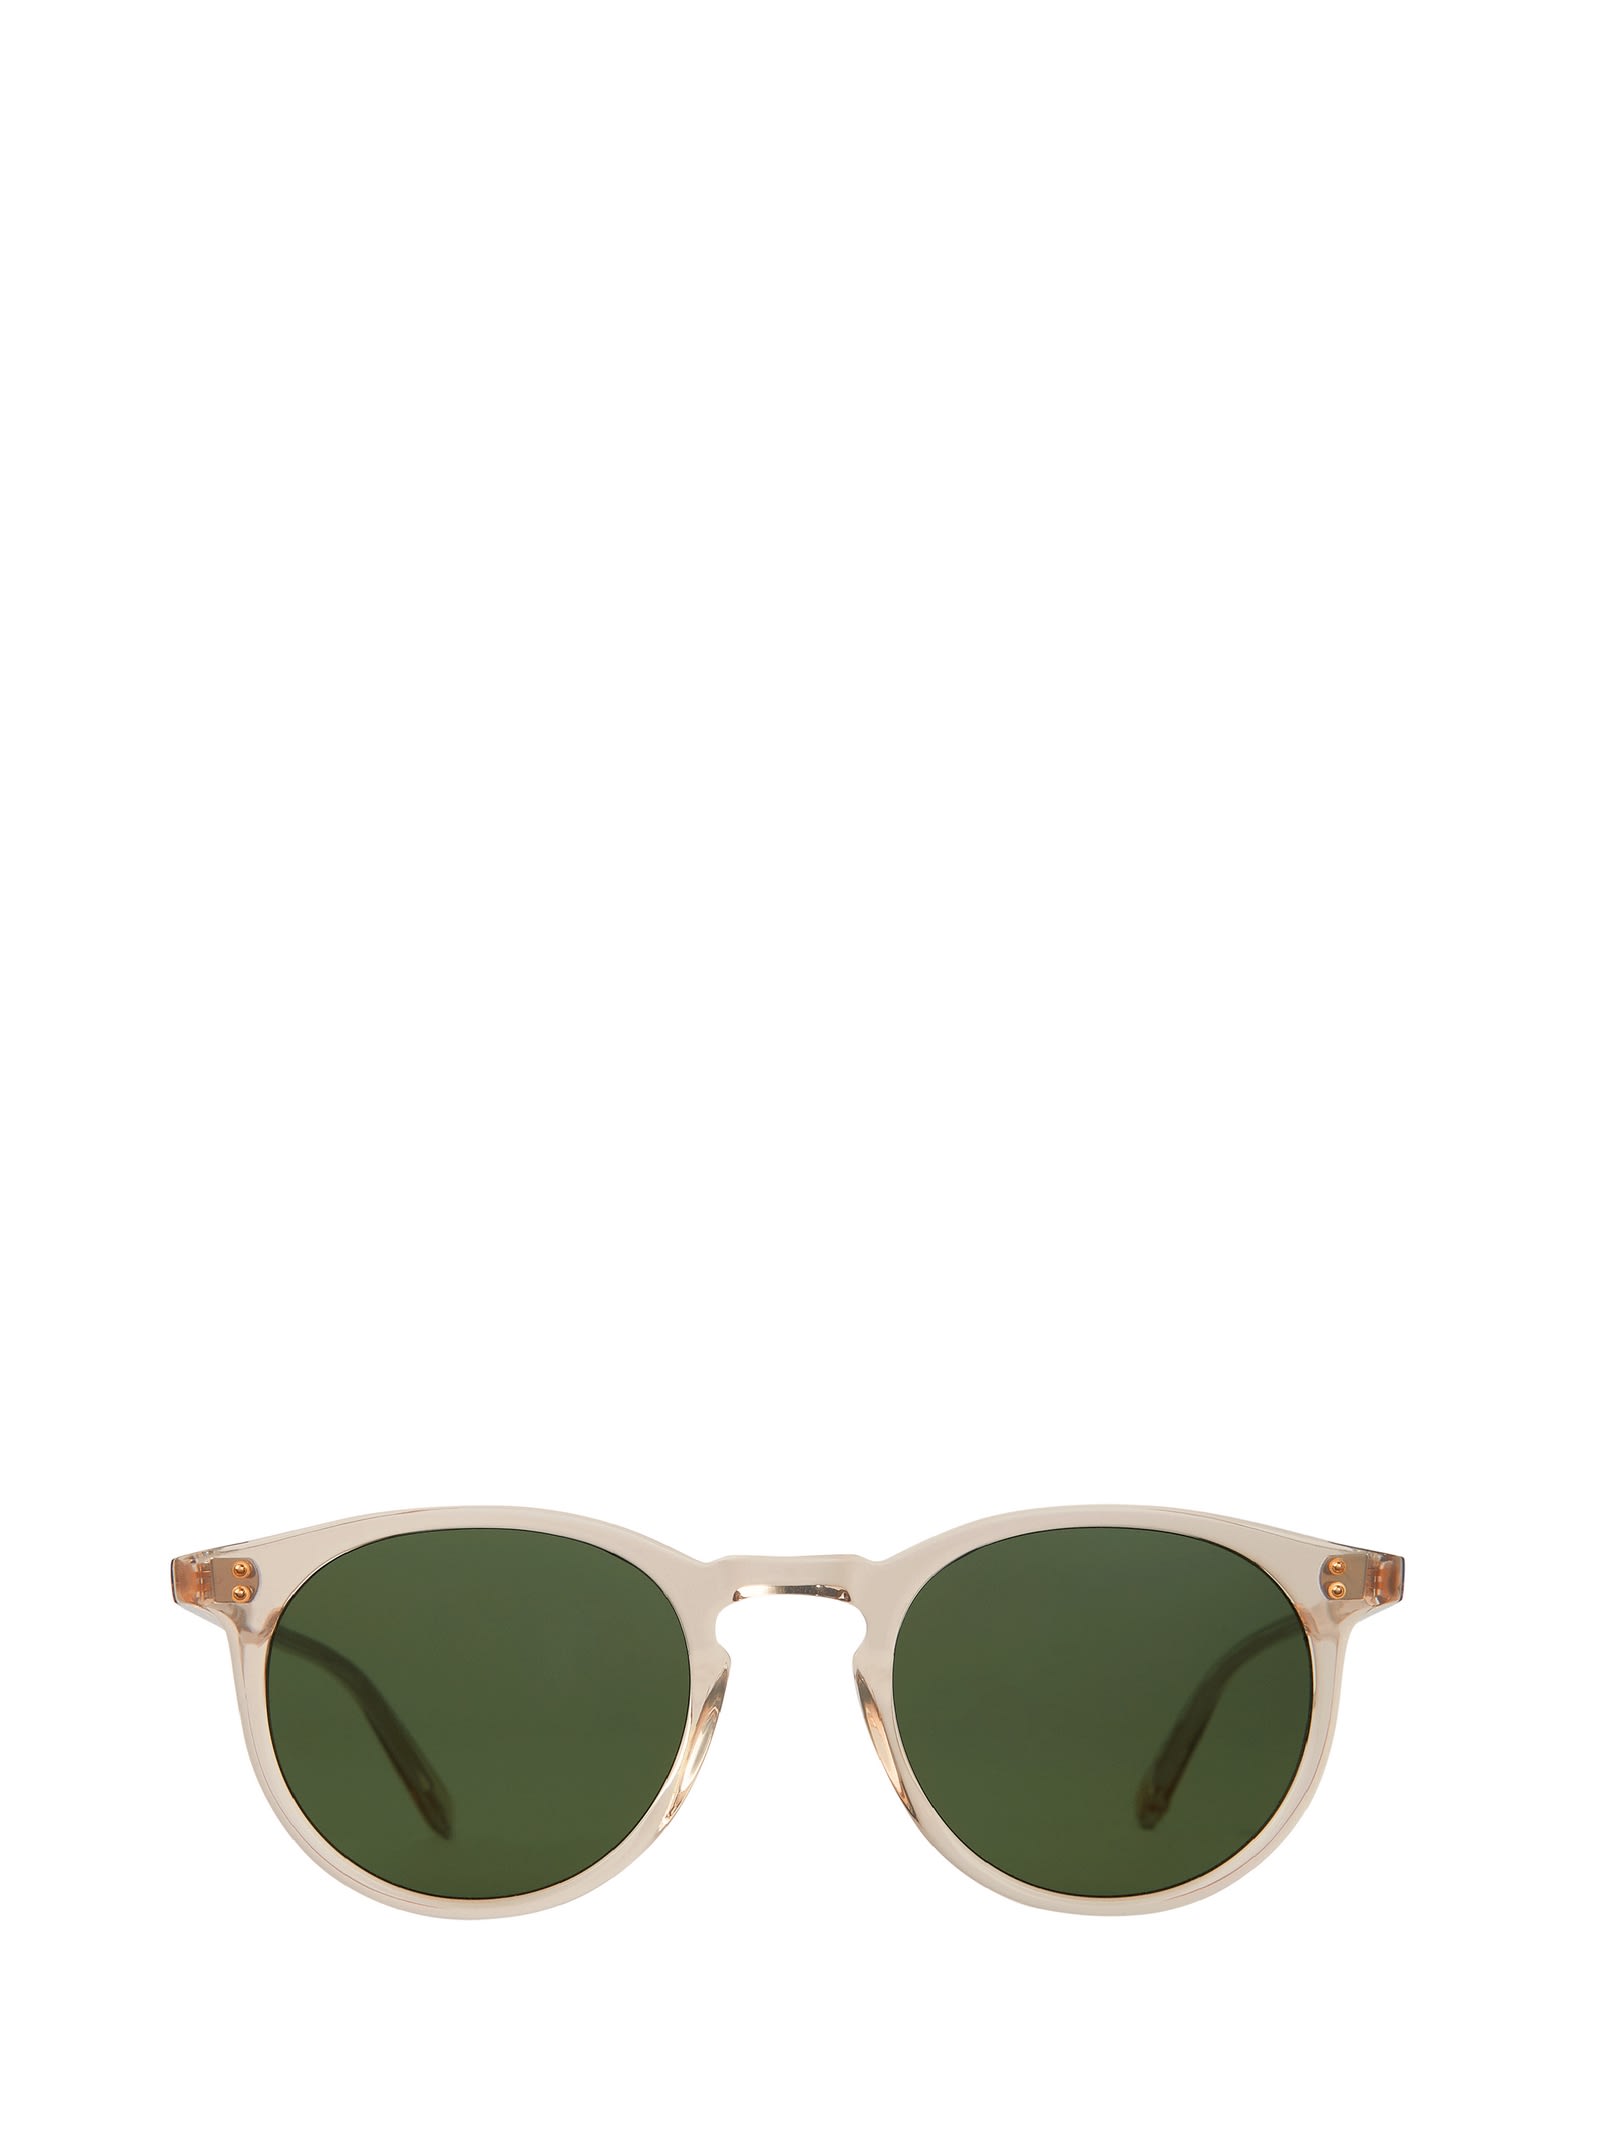 Carlton Sun Bio Beige Crystal/bio Green Sunglasses